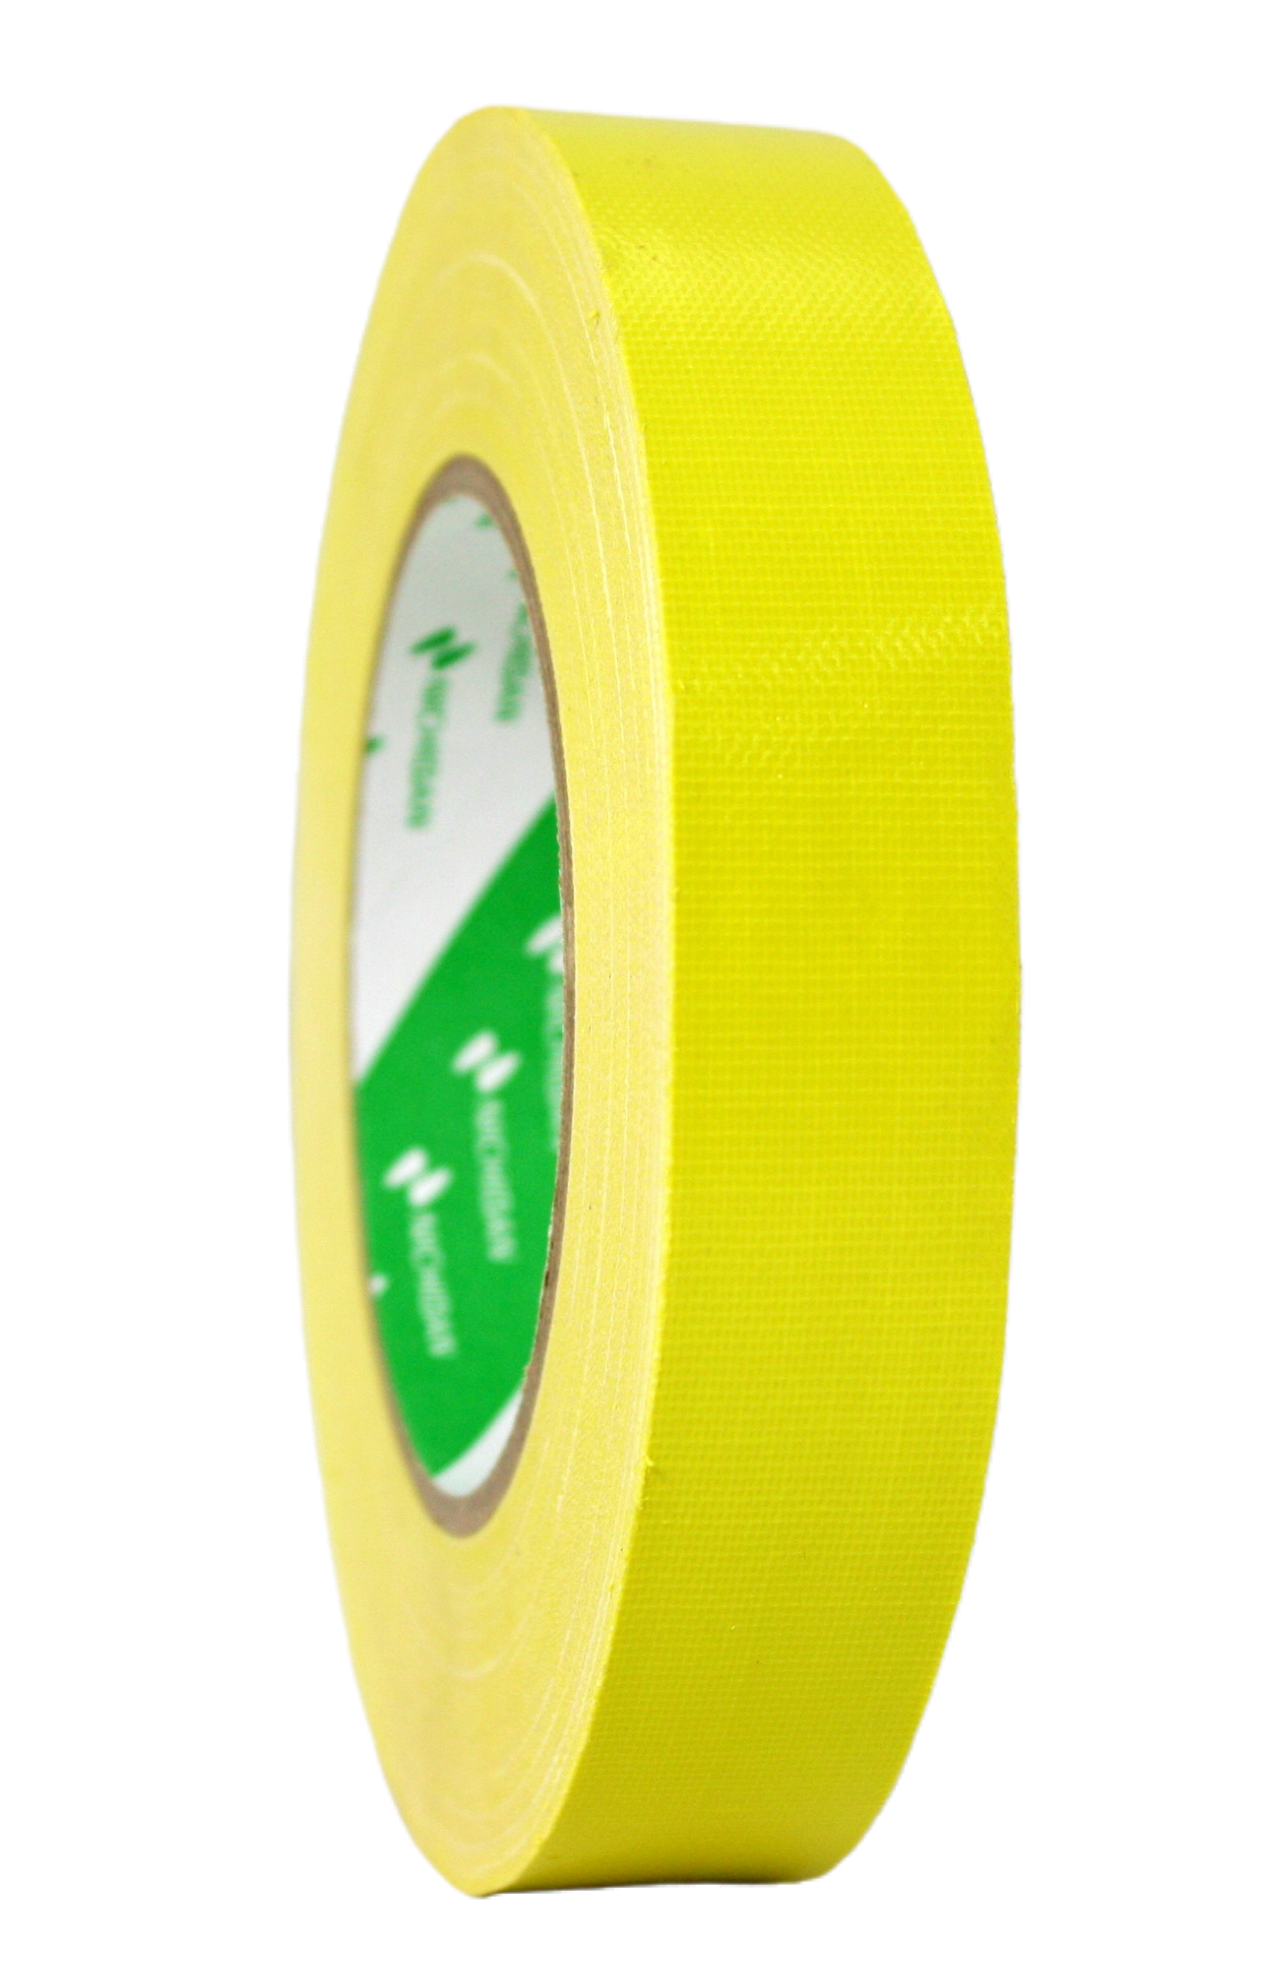 Nichiban 1" Gaffer Tape, Yellow, side view